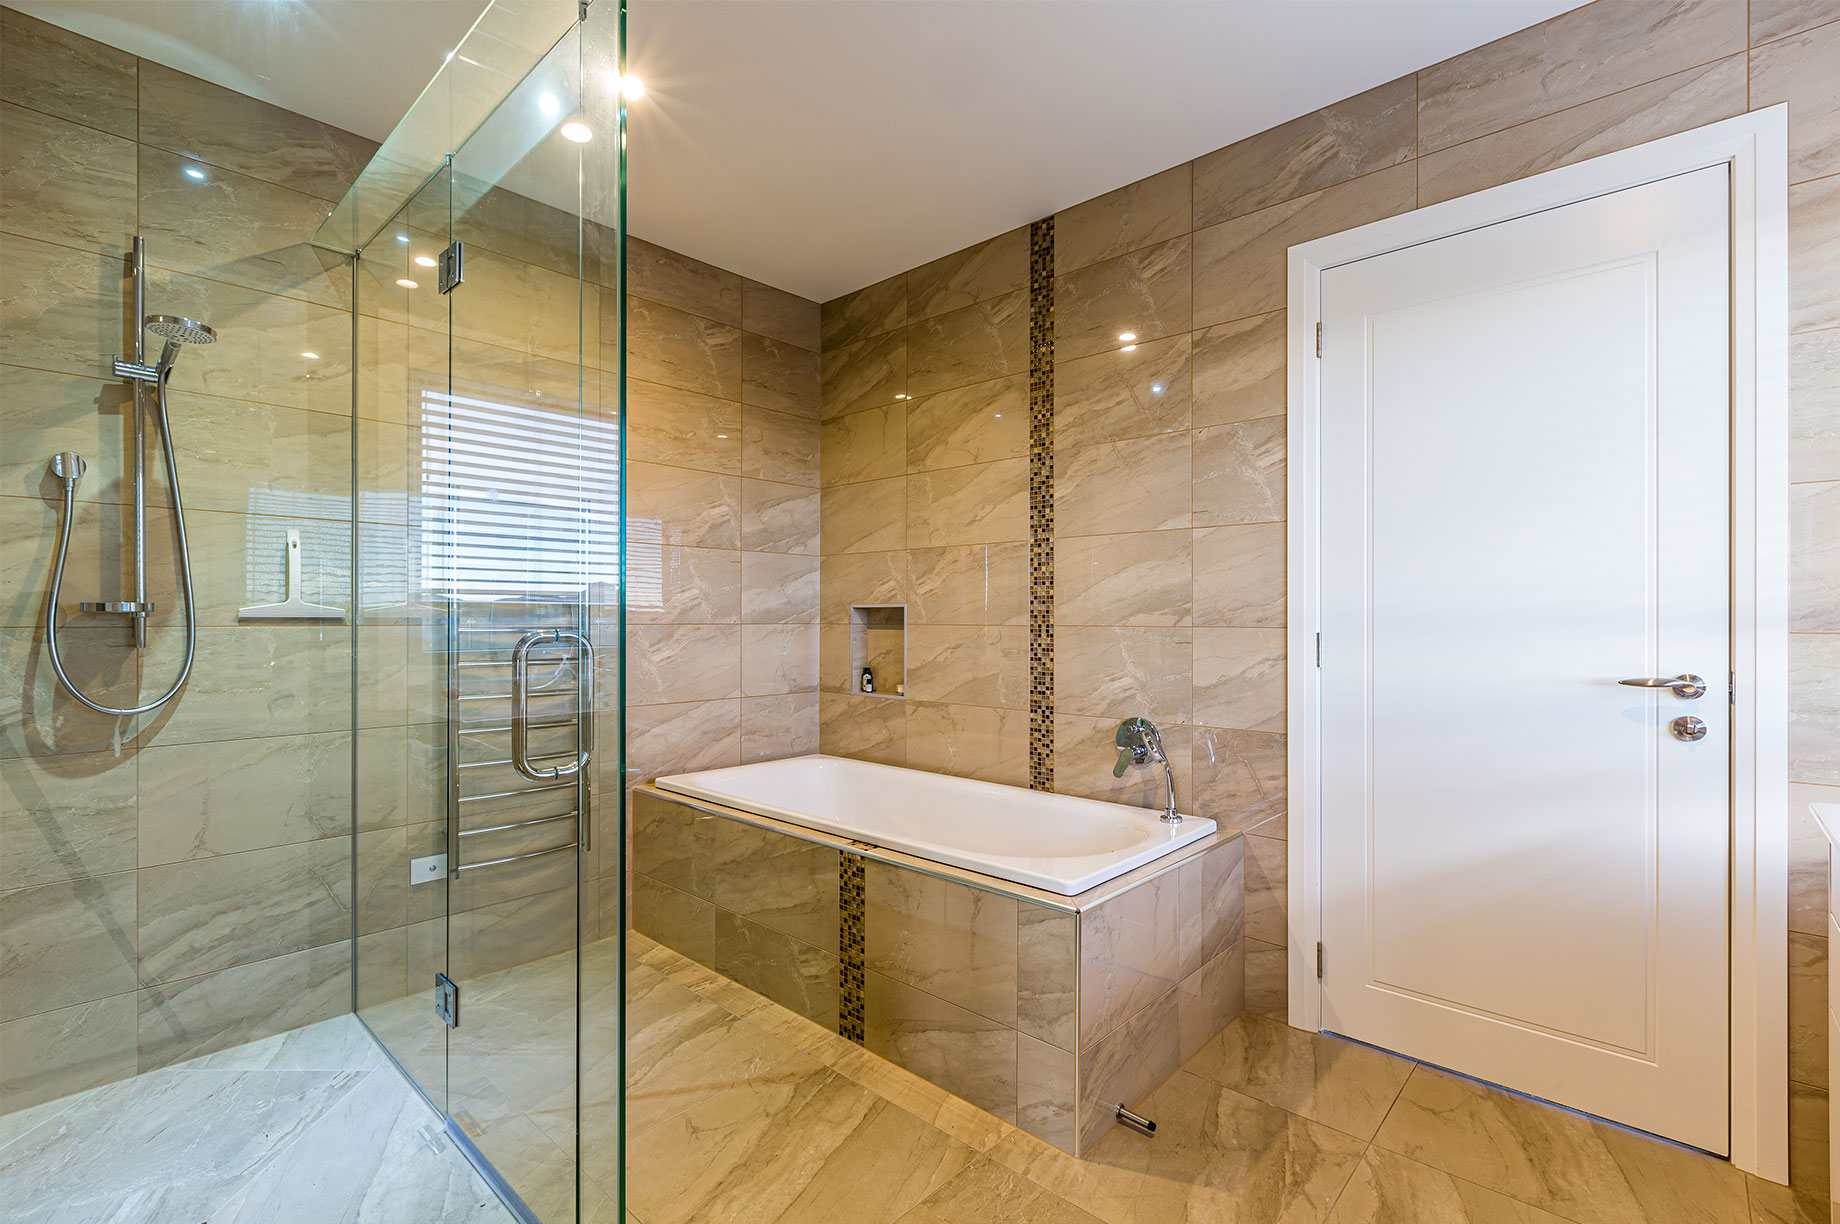 Beige tiled bathroom interior